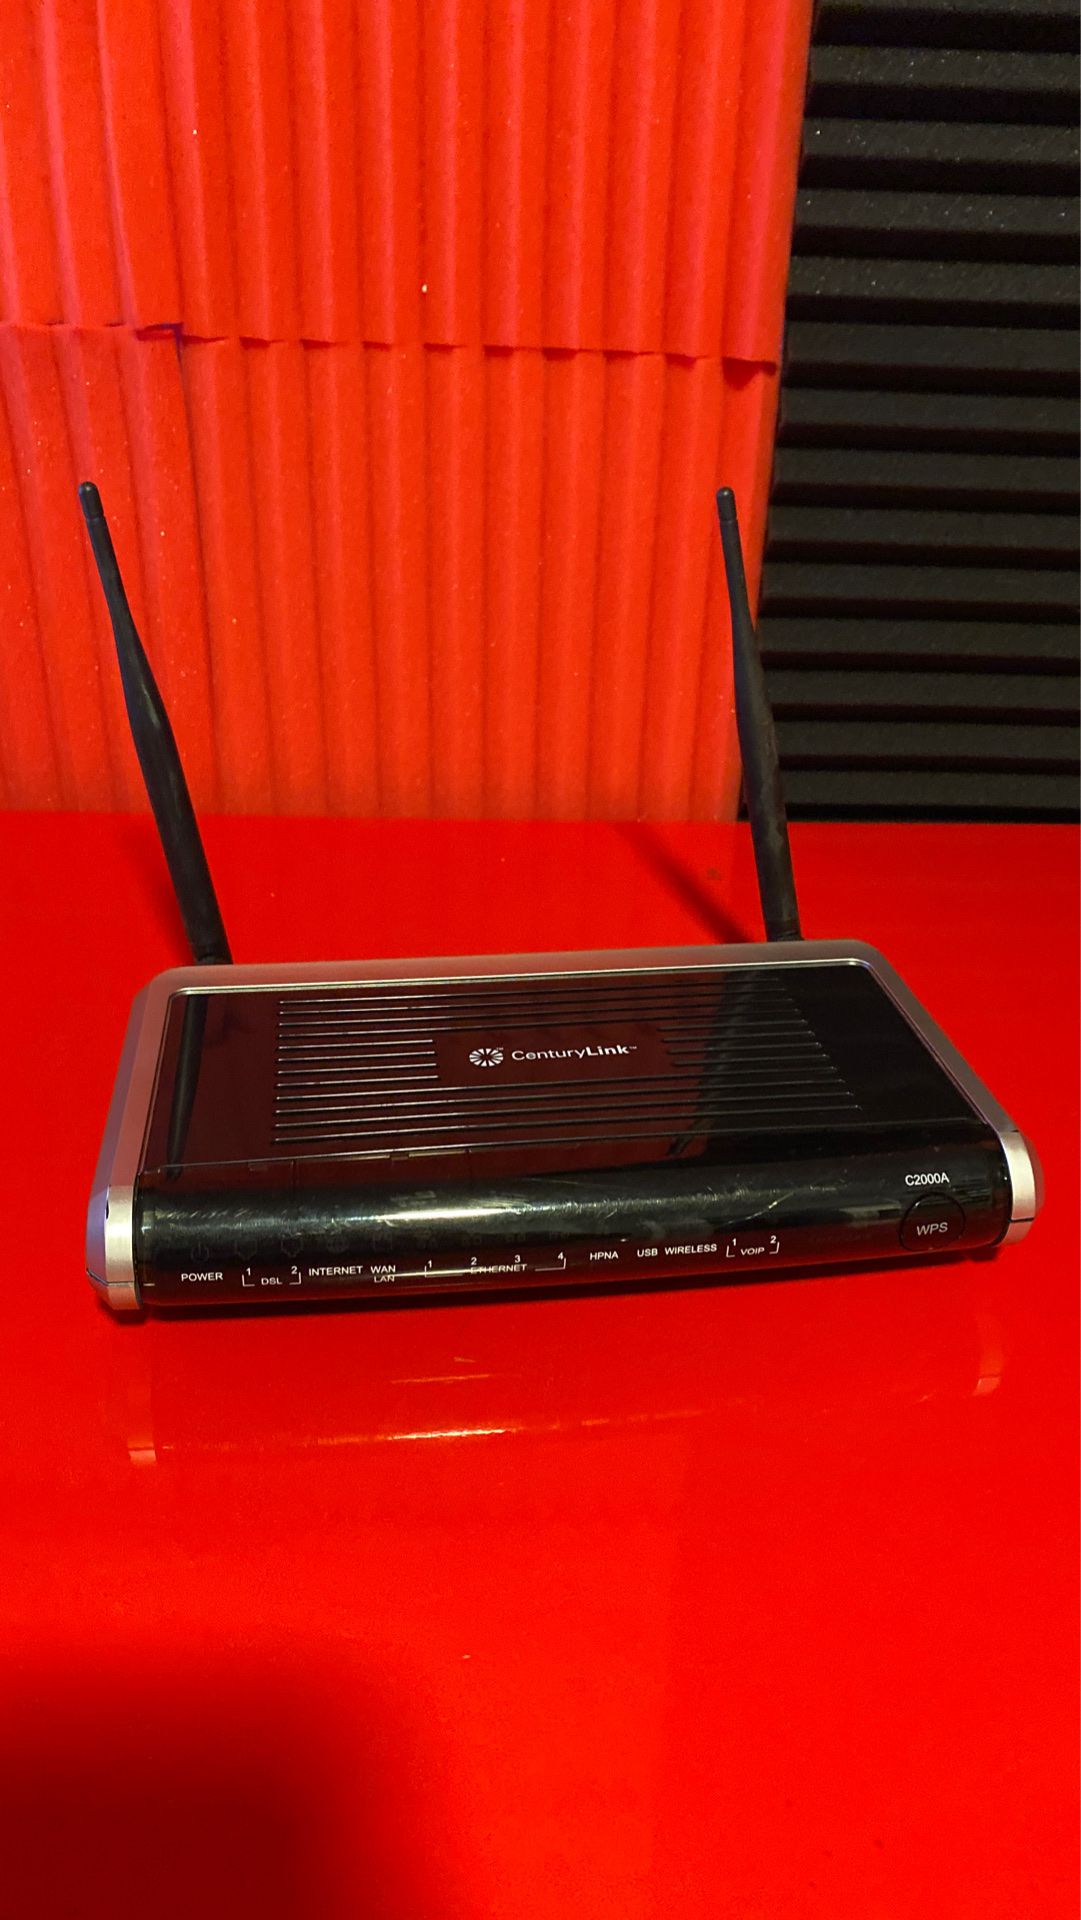 Centurylink WiFi router